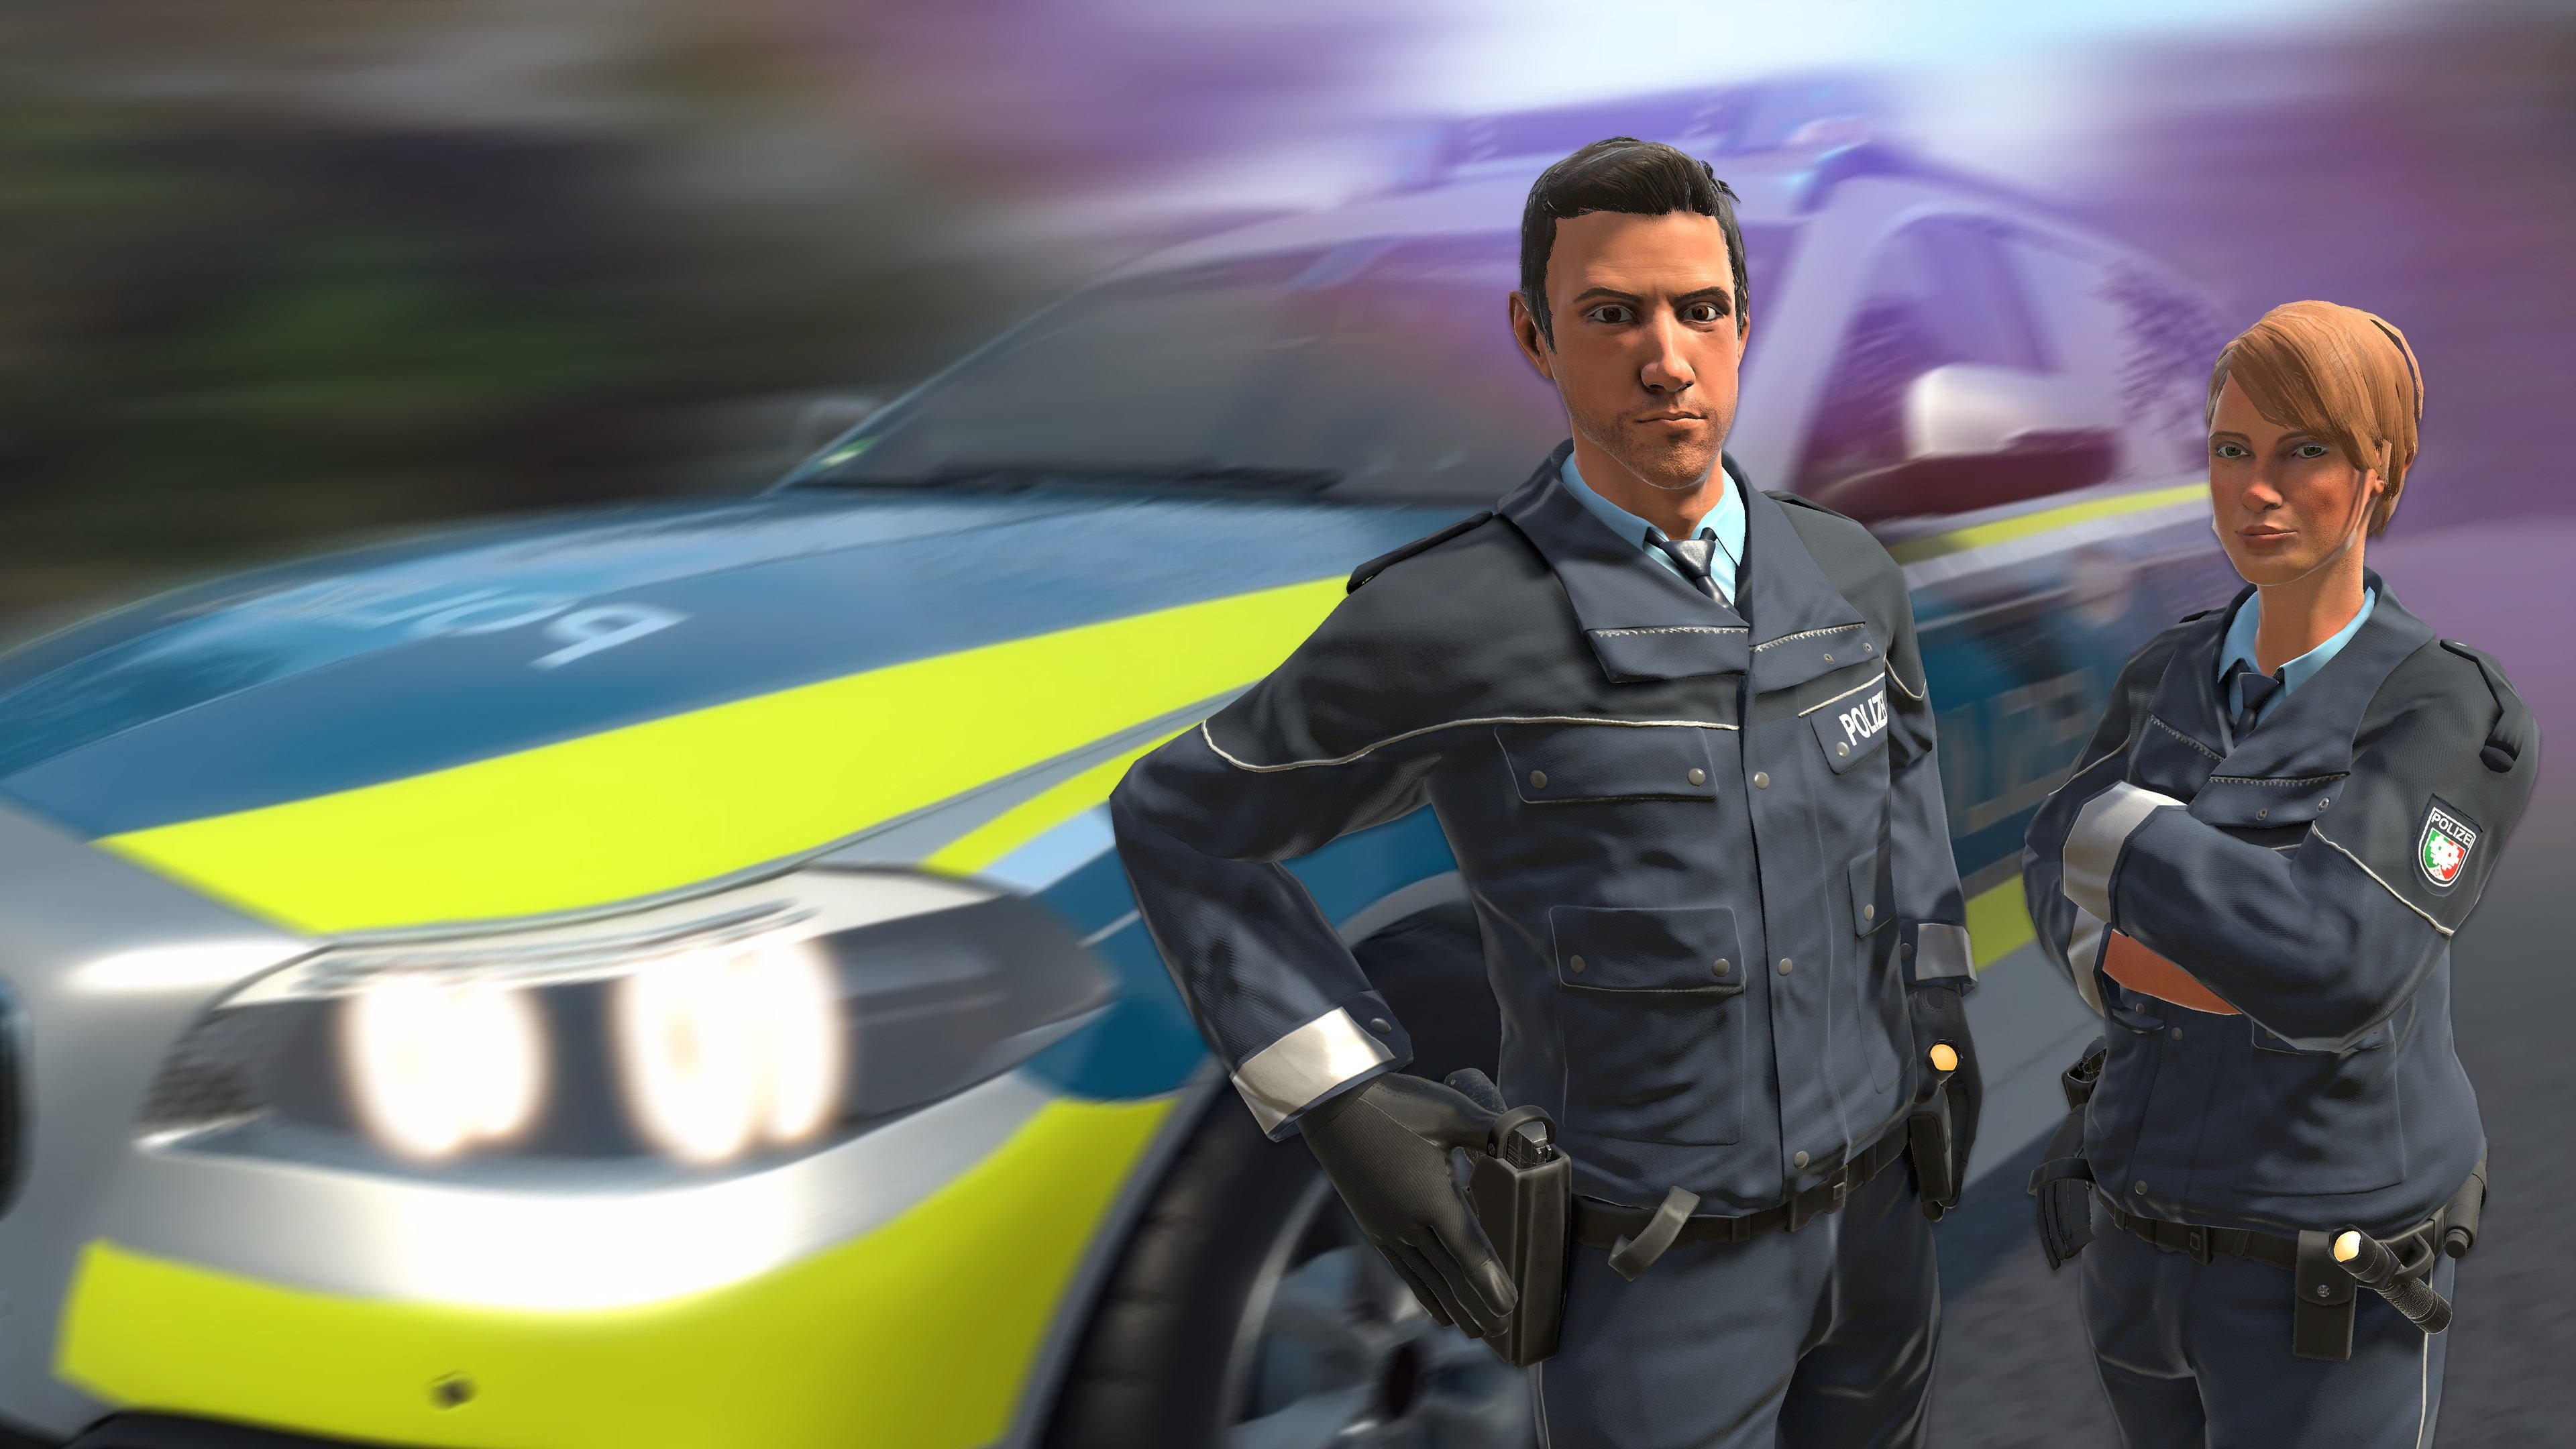 Autobahn Police Simulator 2 cover image